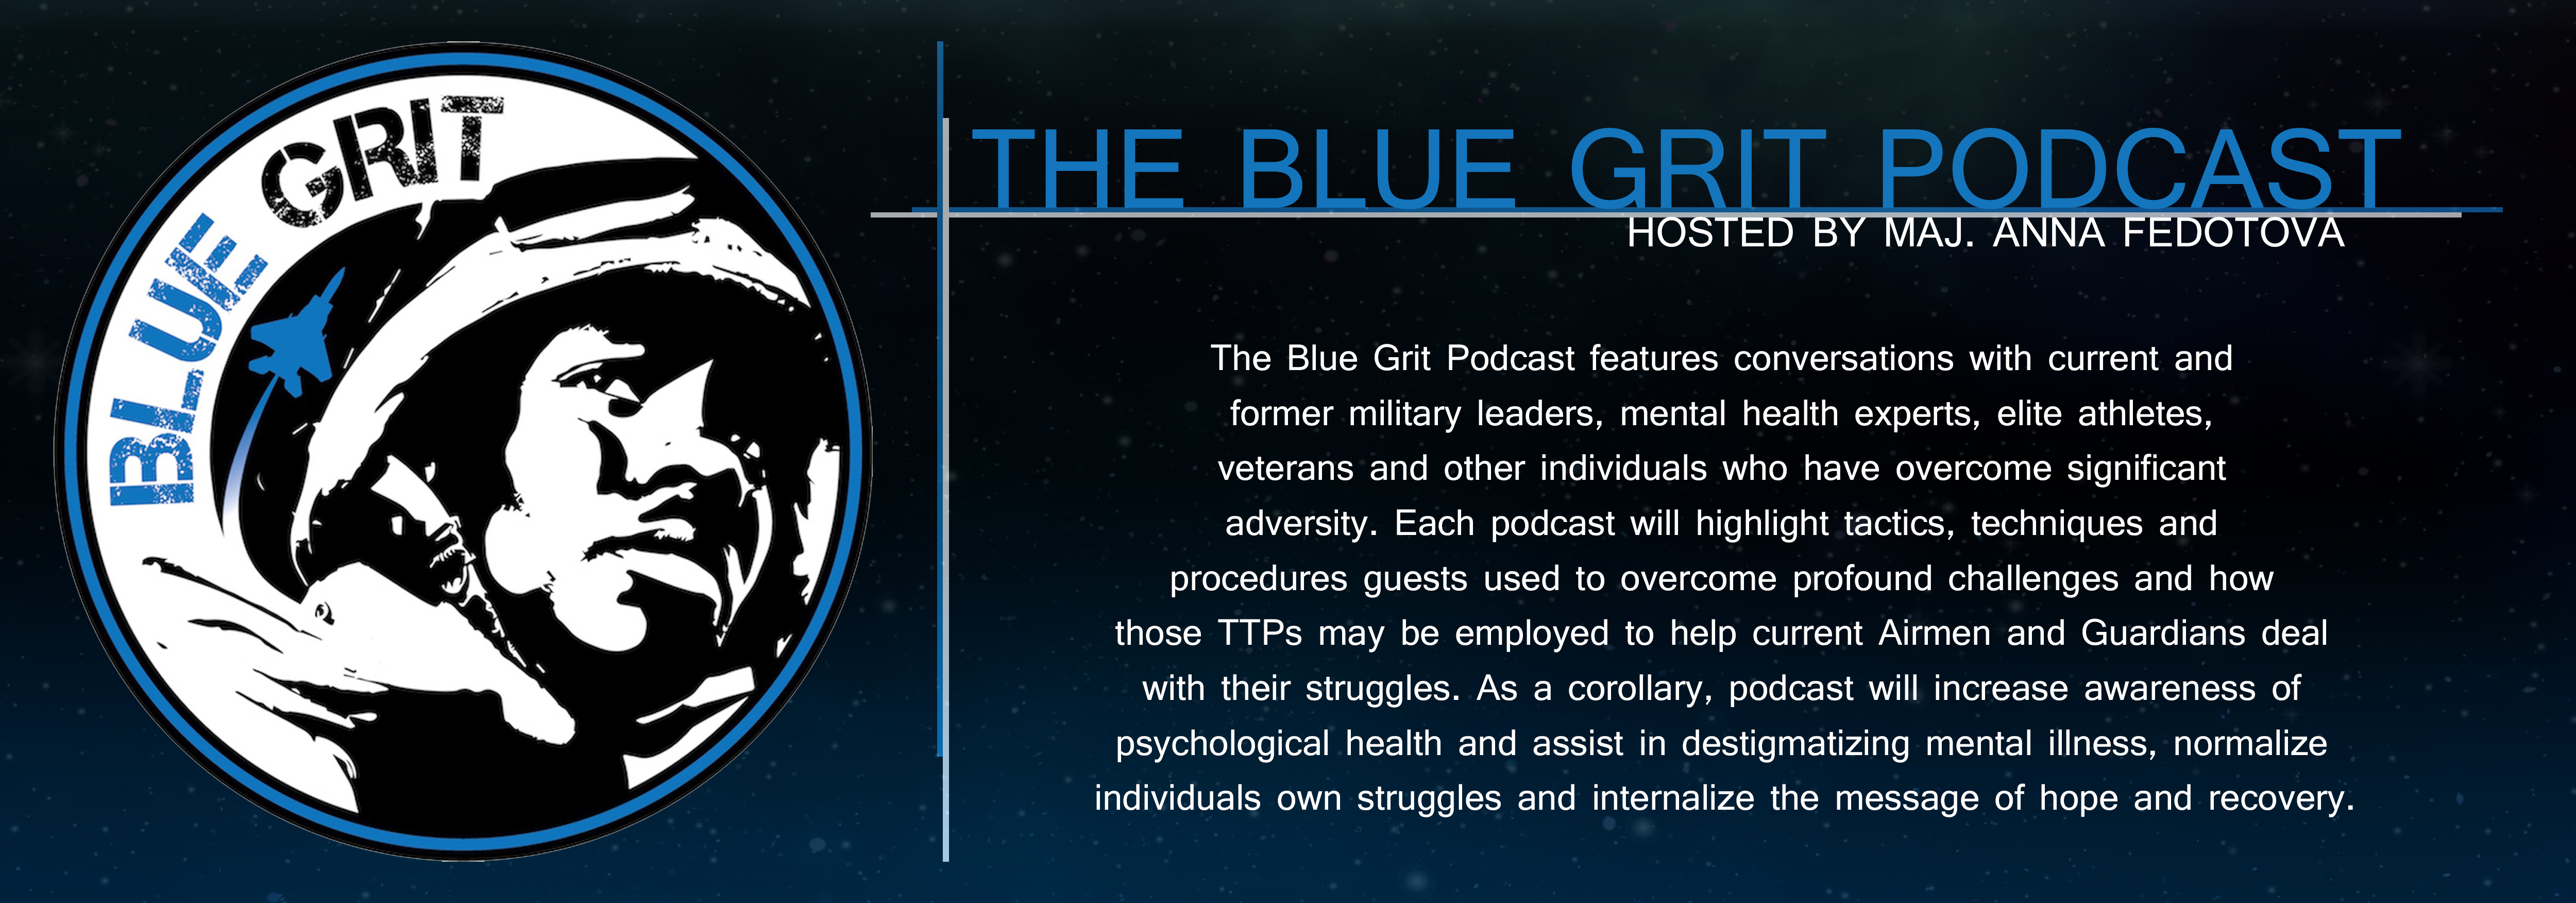 Blue Grit Podcast hero image